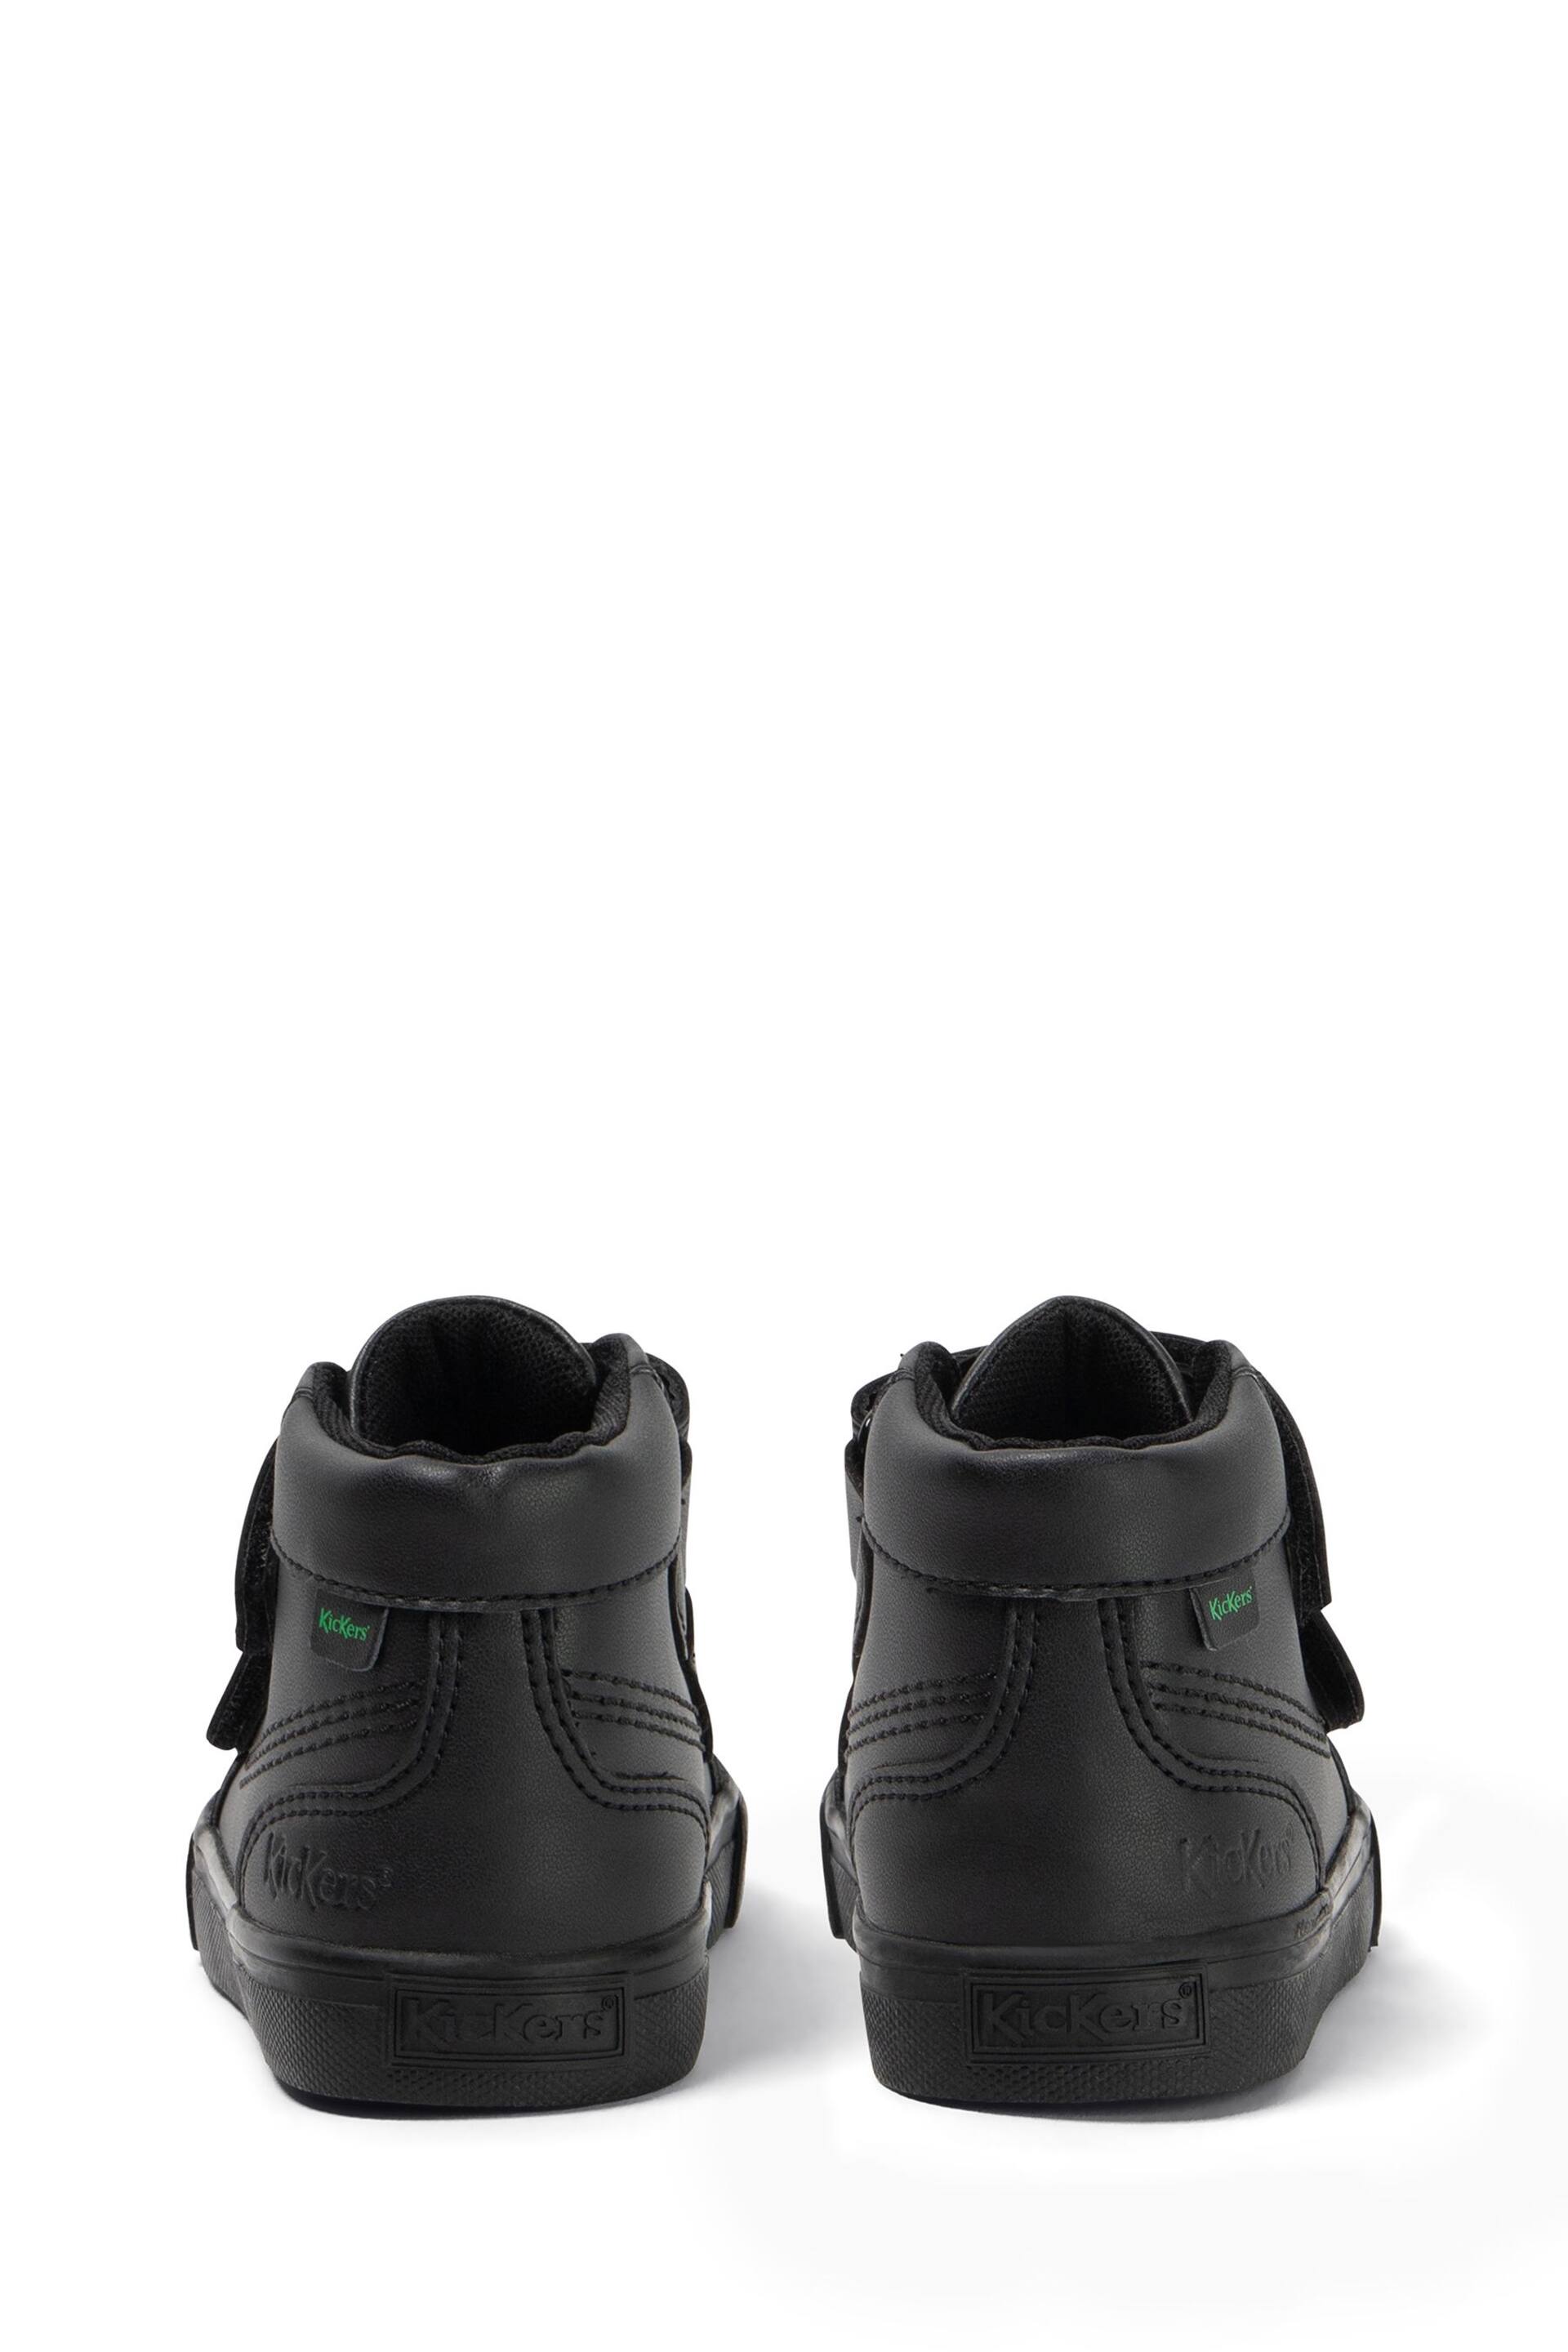 Kickers Infant Unisex Tovni Hi Vel Vegan Black Shoes - Image 4 of 6